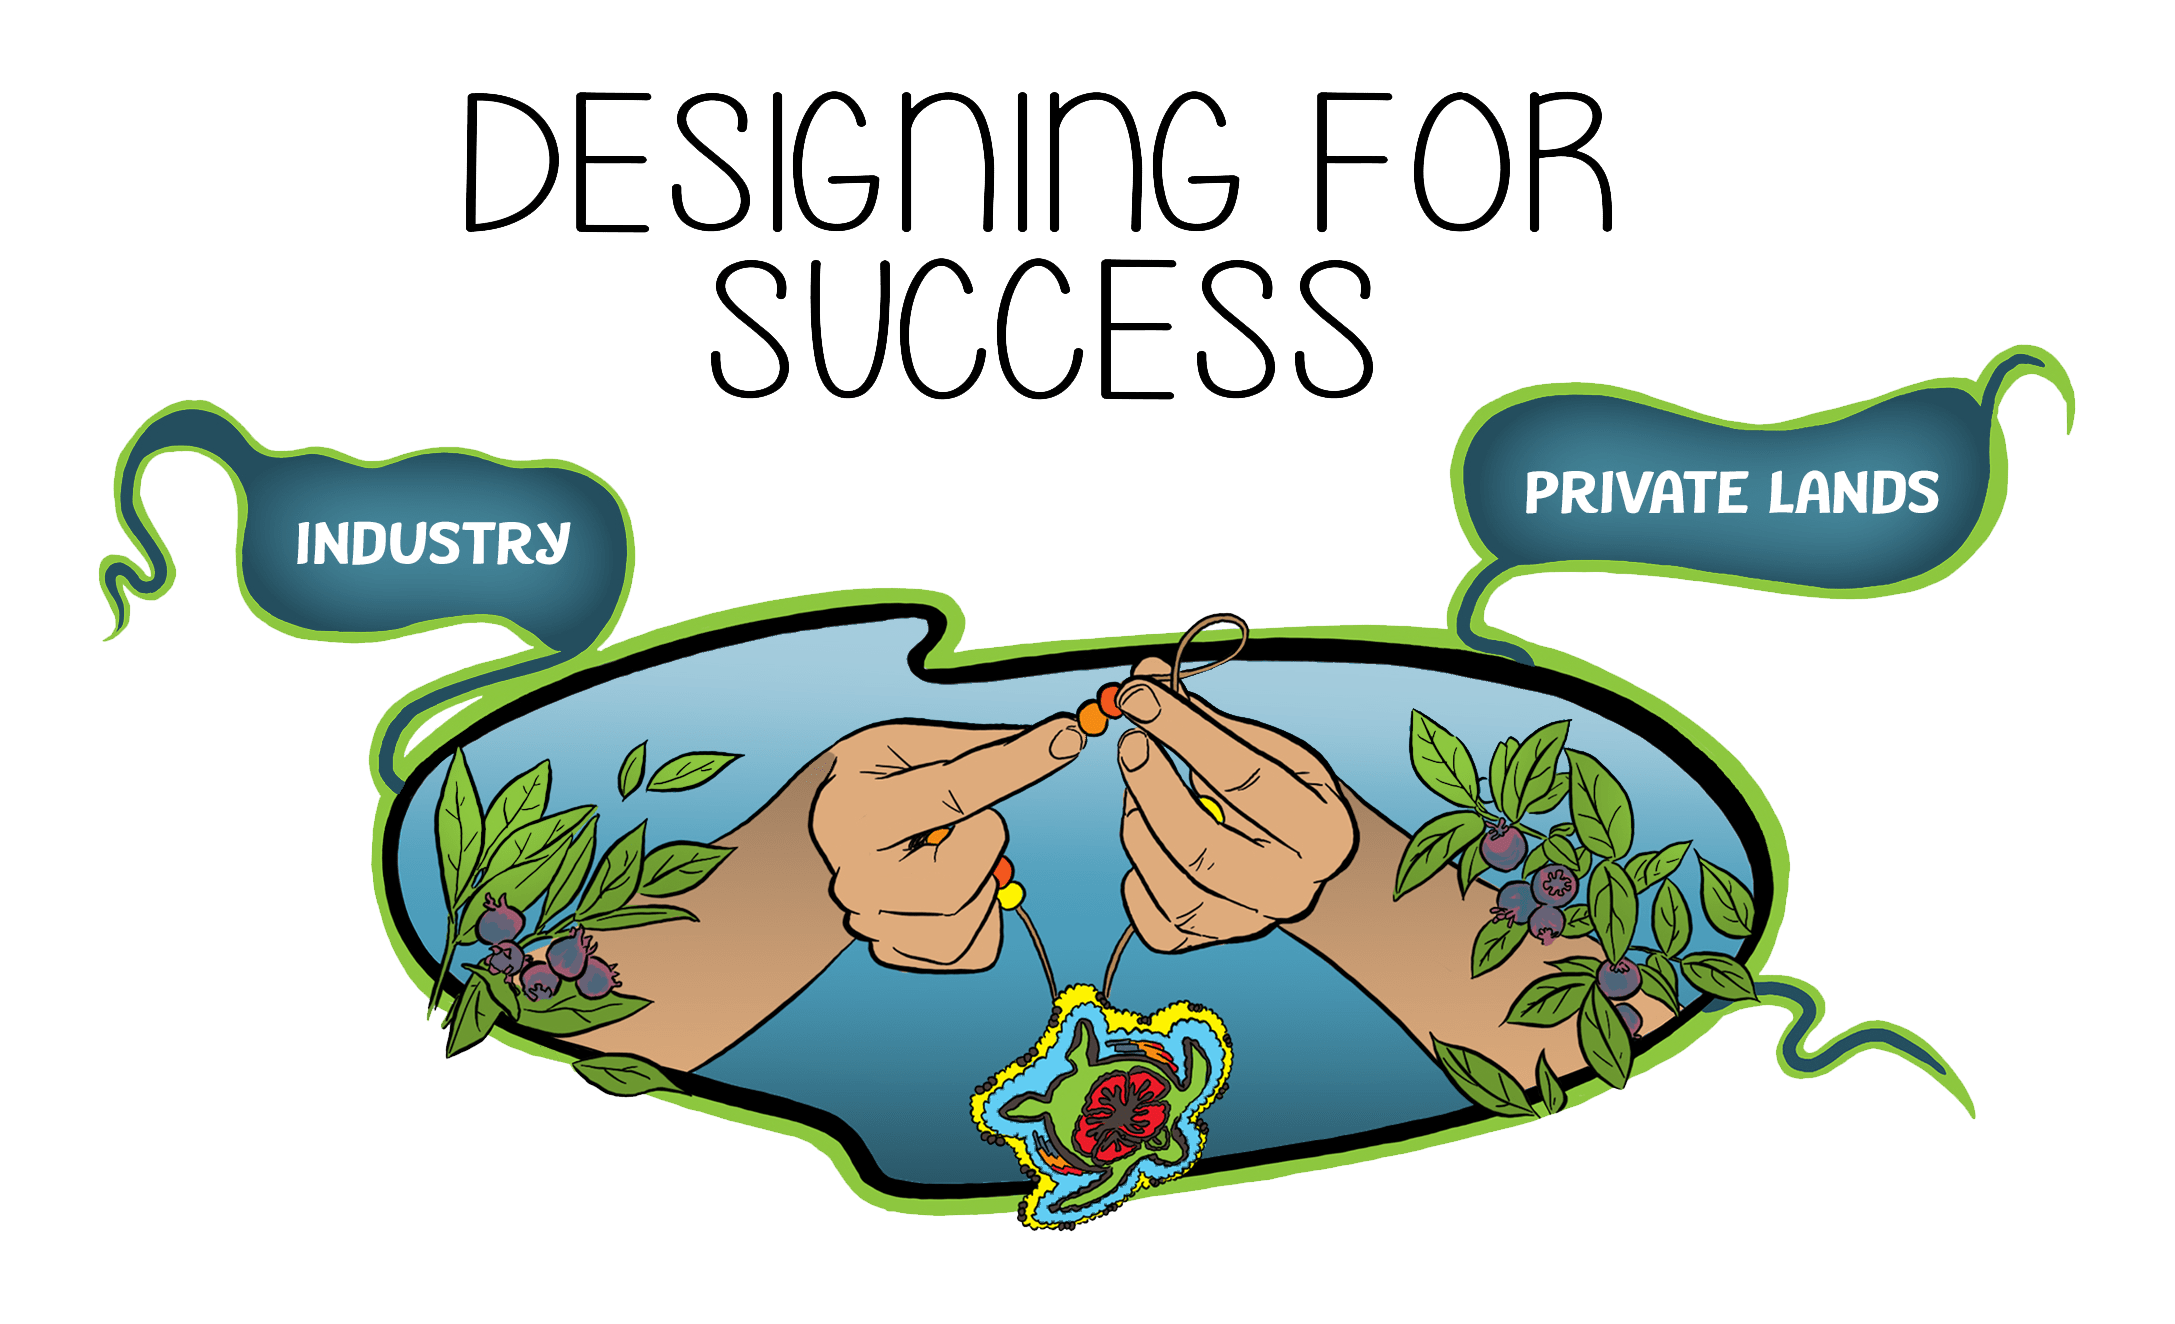 Designing for Success Infographic